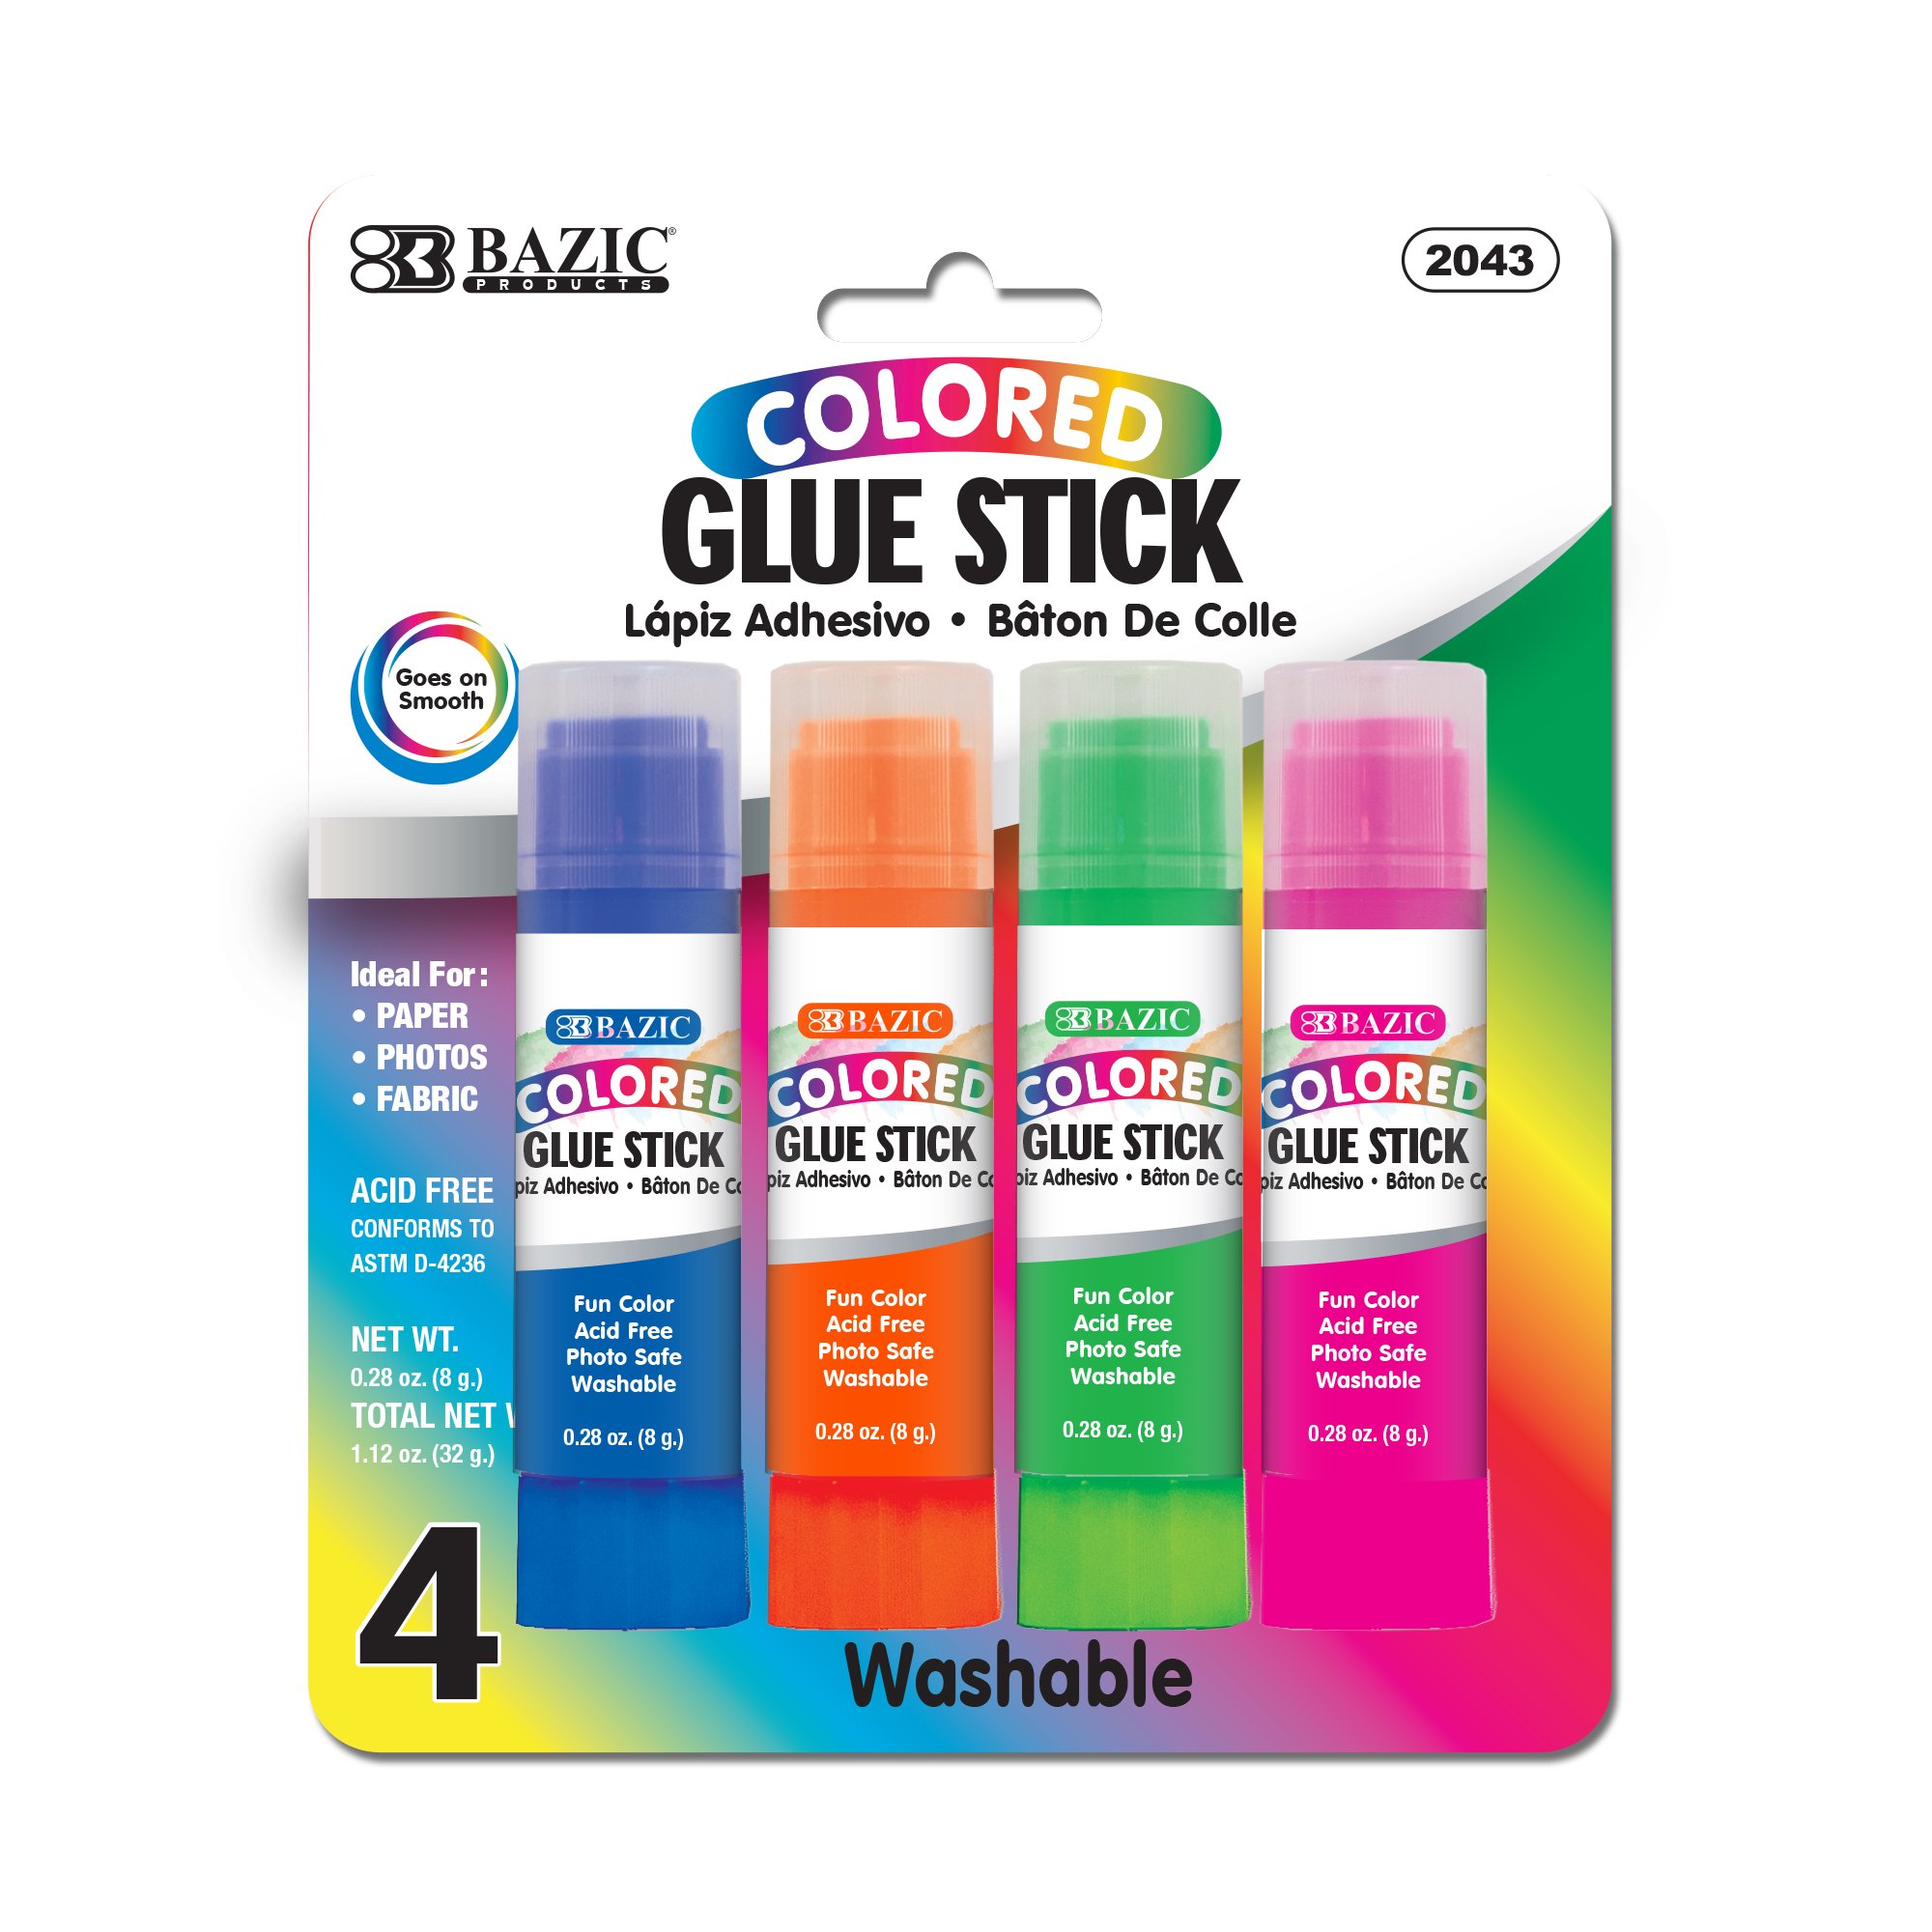 8g / 0.28 Oz Washable Colored Glue Stick (4/Pack)